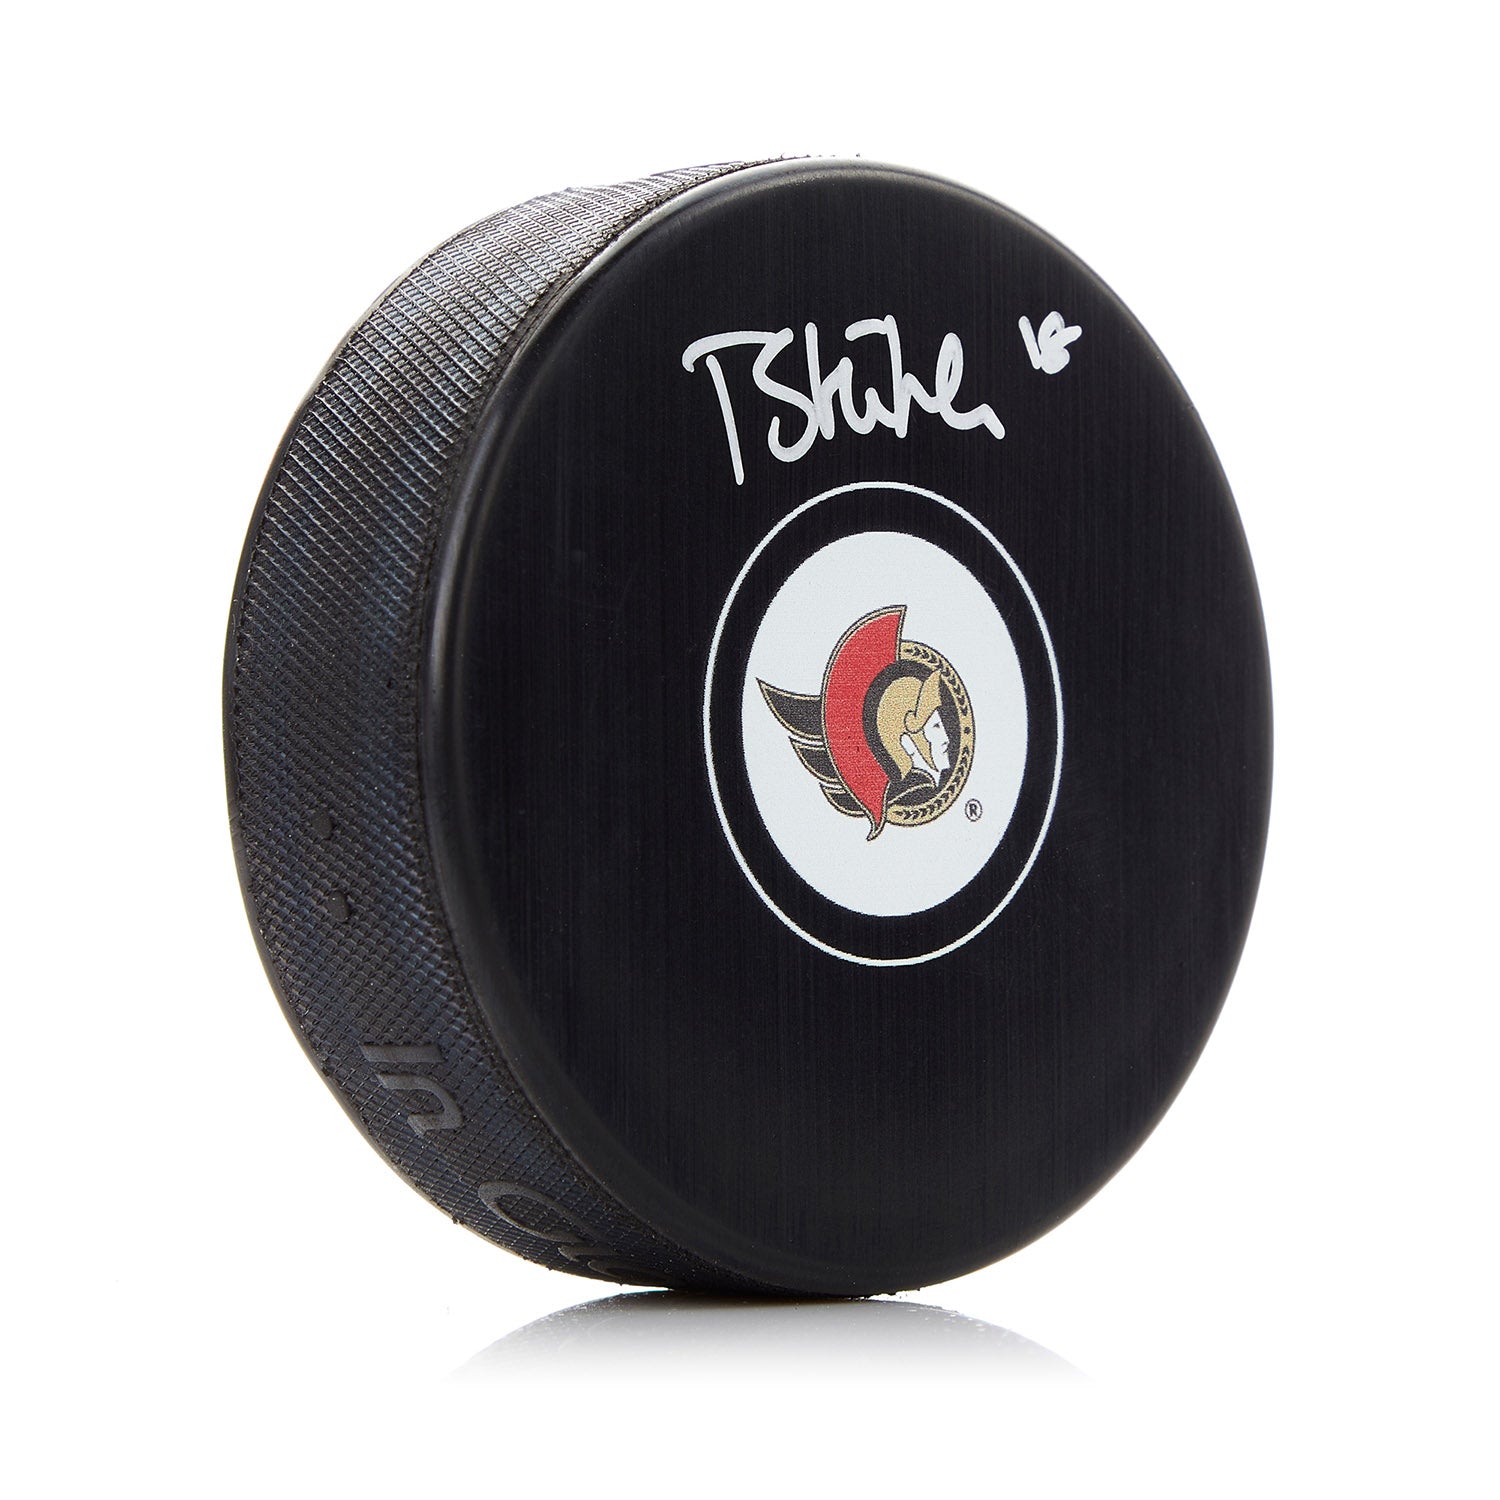 Tim Stutzle Ottawa Senators Autographed Hockey Puck